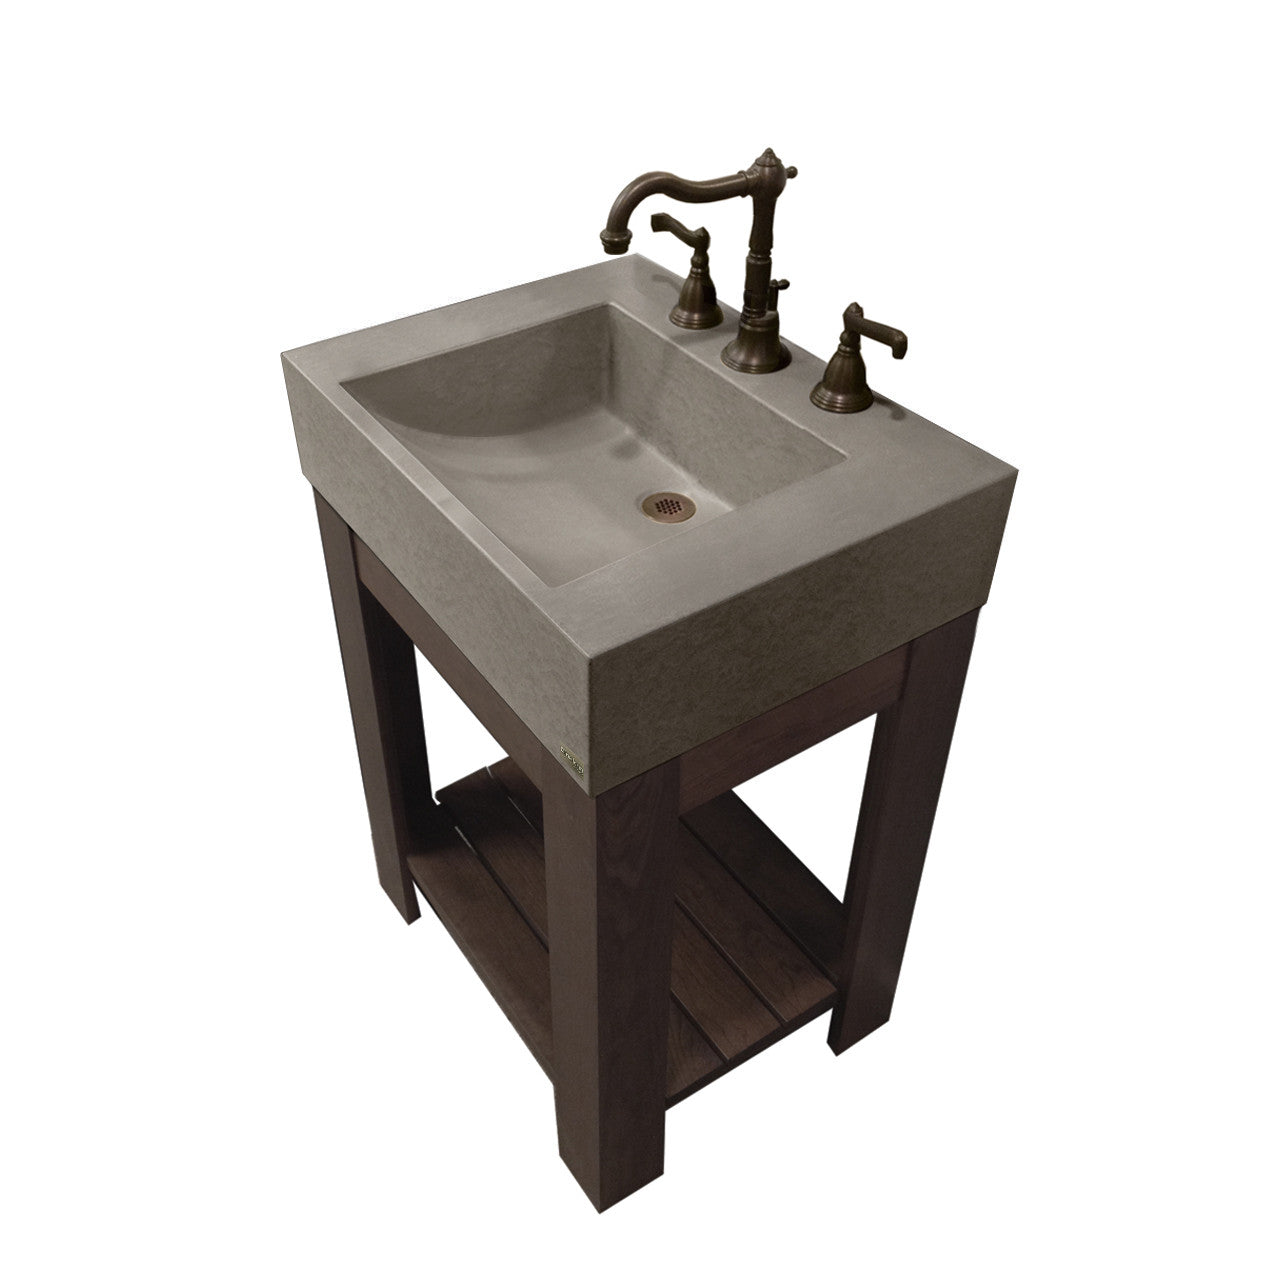 Dark gray concrete sink with dark wood console supports. 